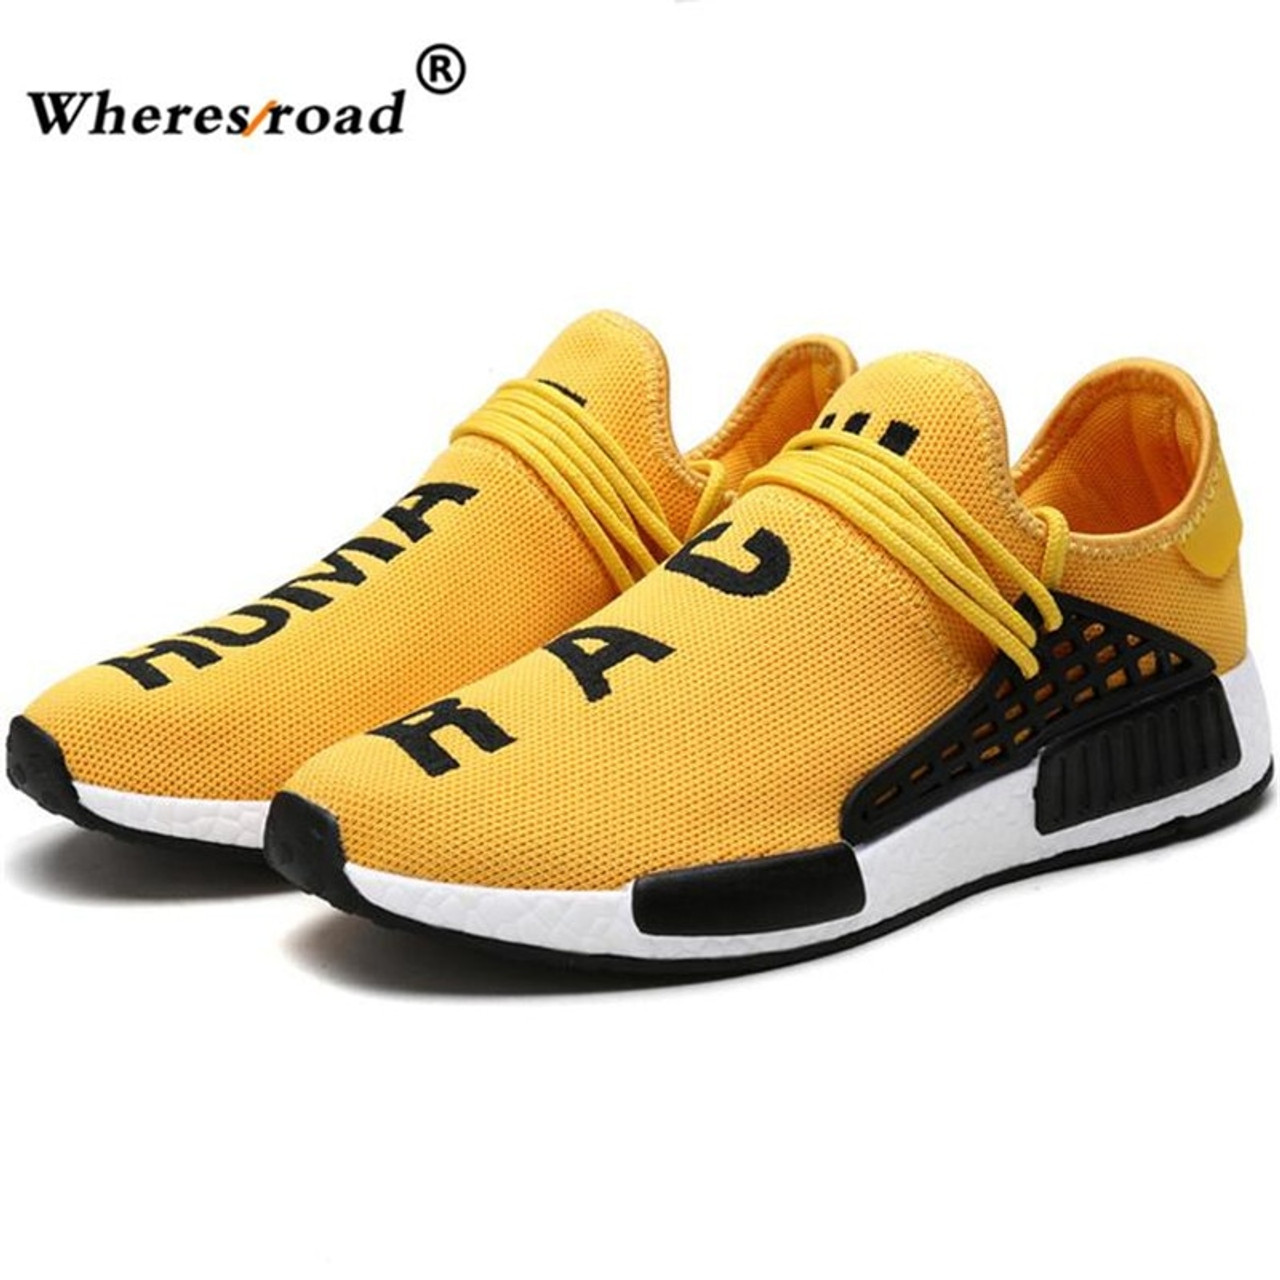 yellow shoes men